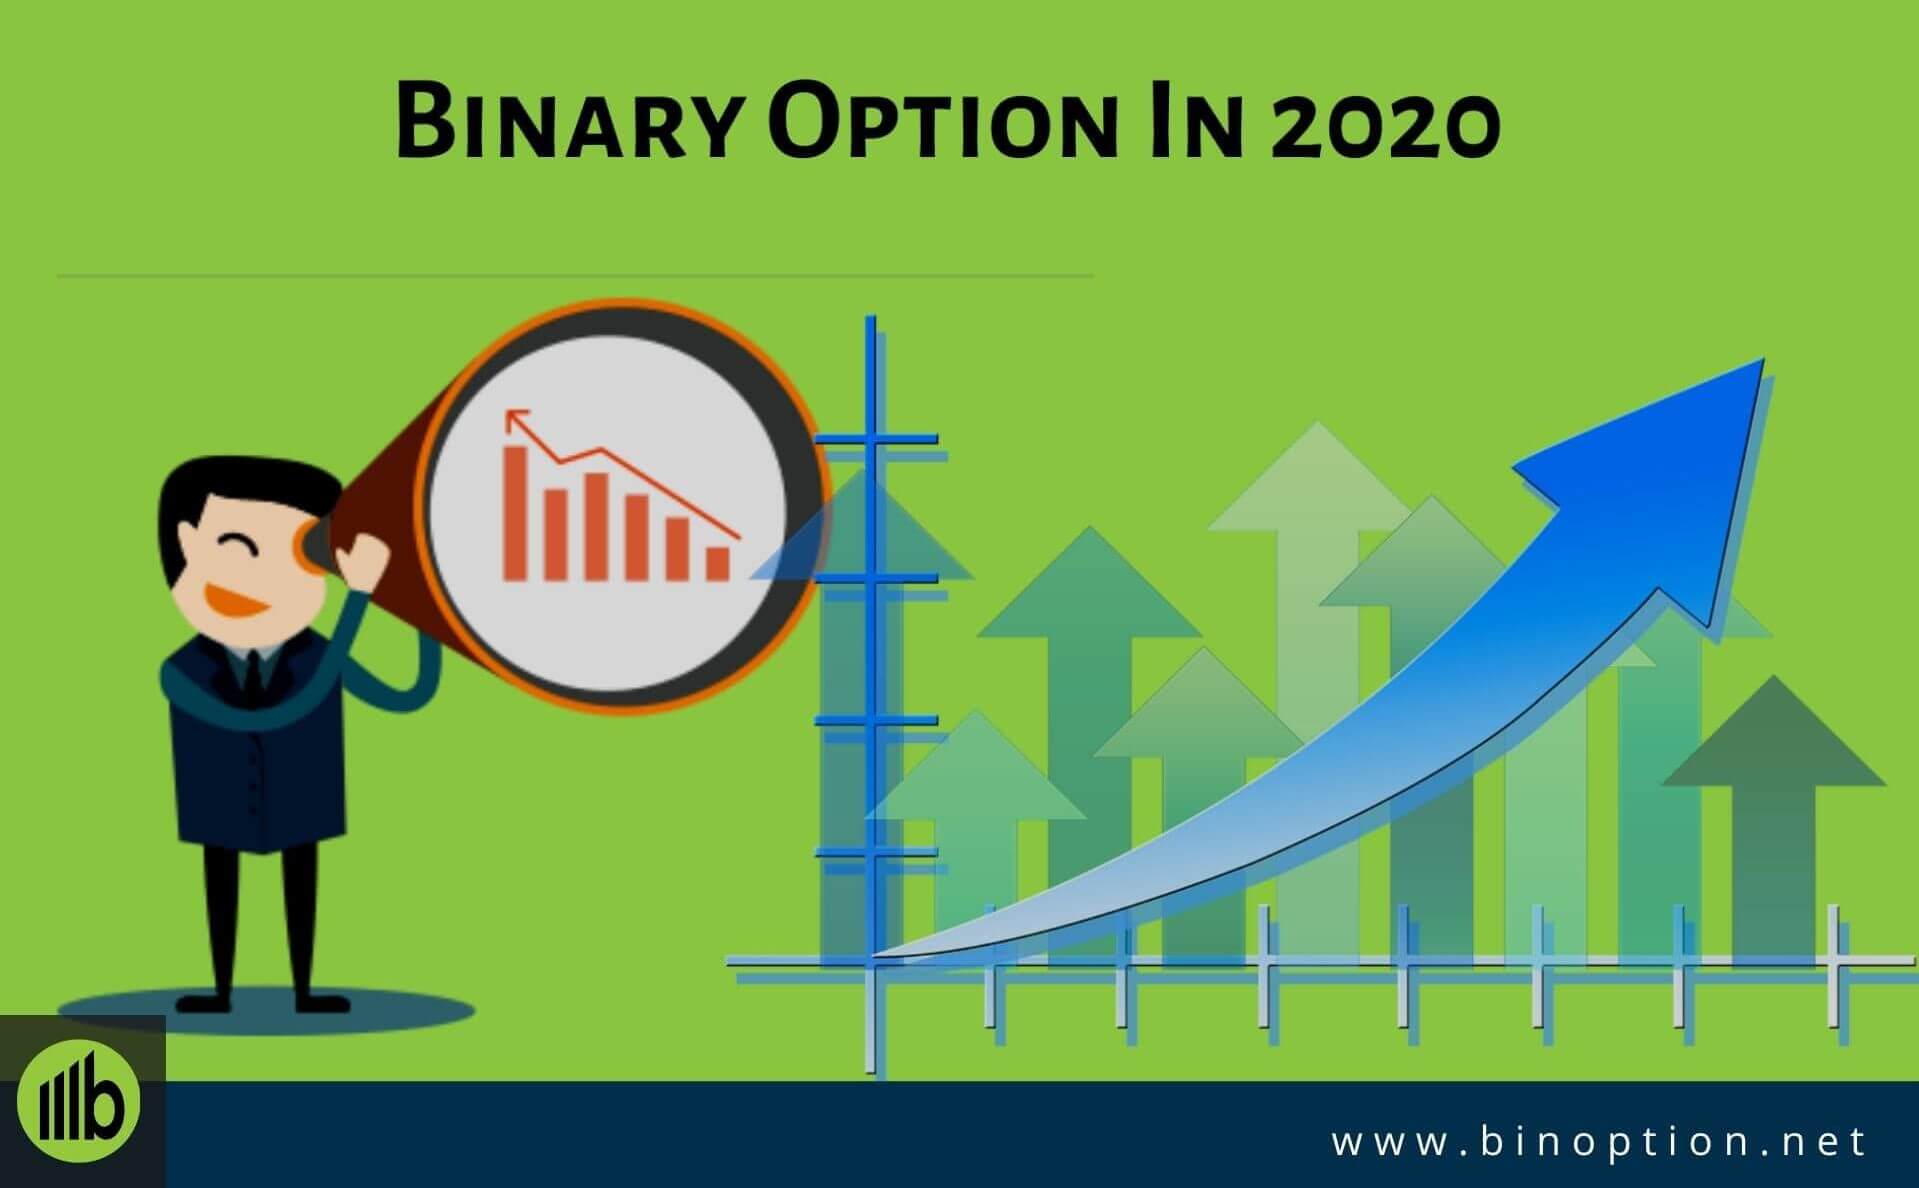 Paypal binary options 2020